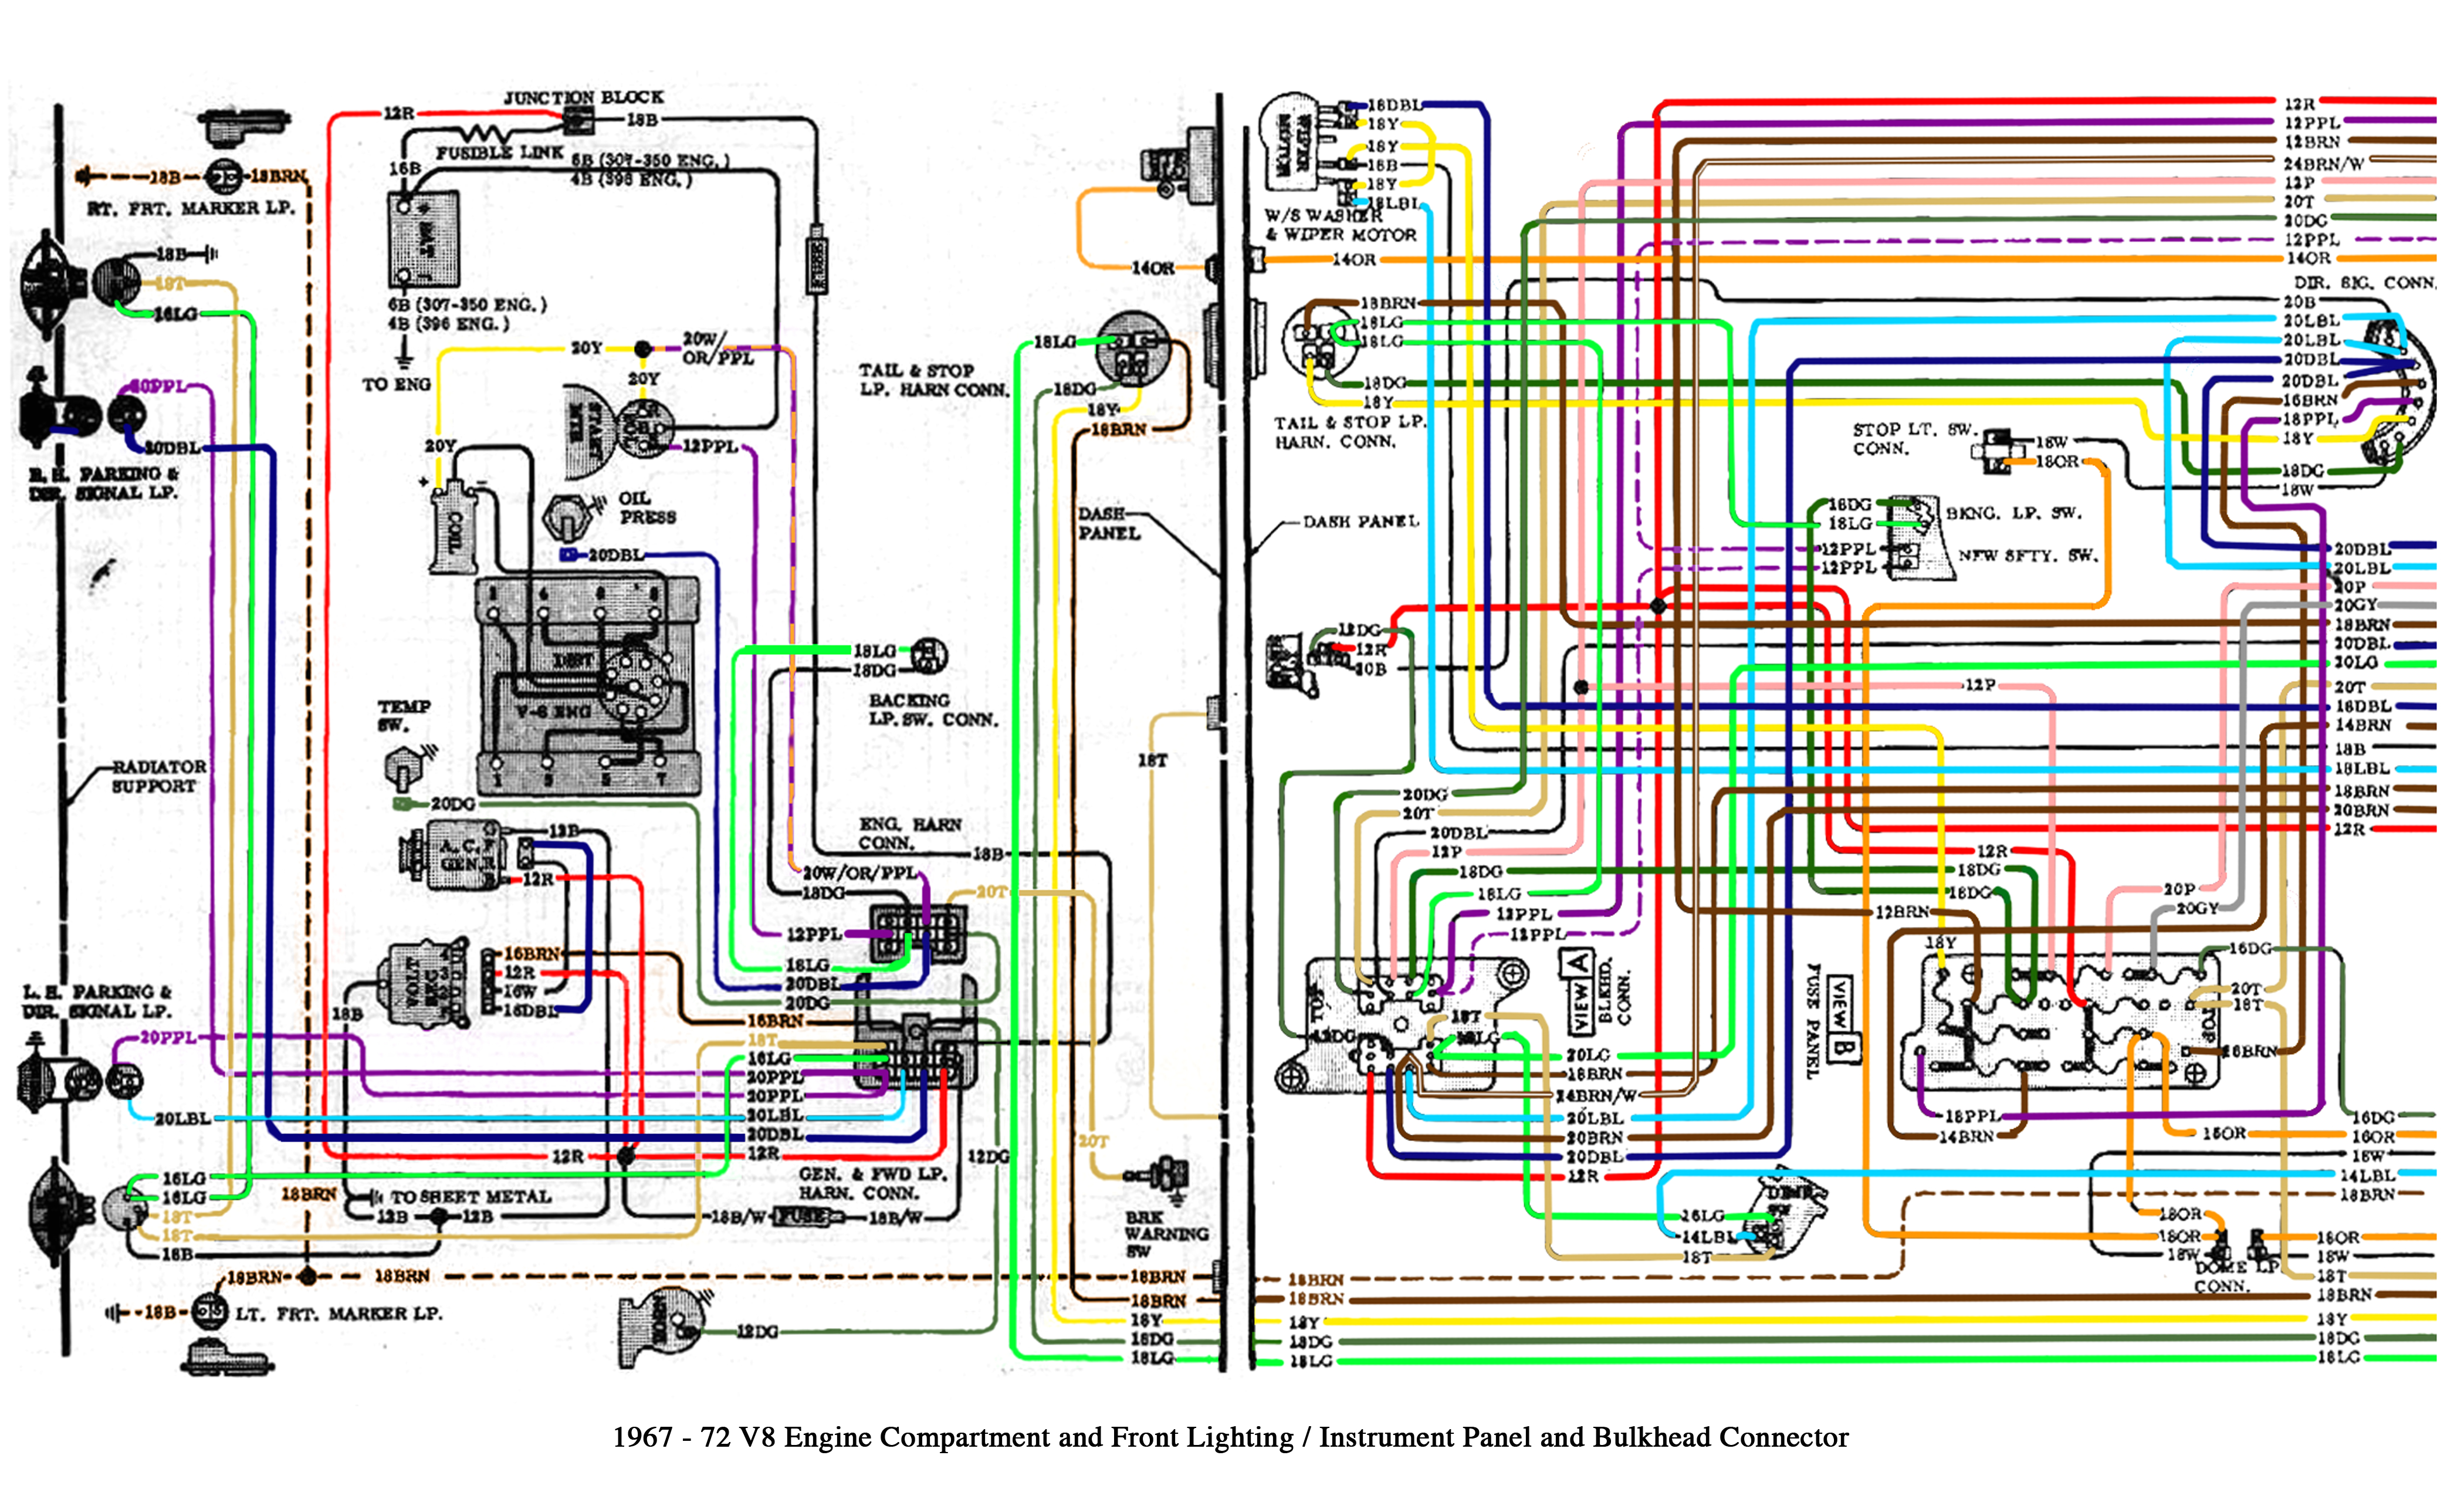 1970 chevy blazer wiring diagram wiring diagram expert 1970 chevy blazer wiring diagram 1970 blazer wiring diagram